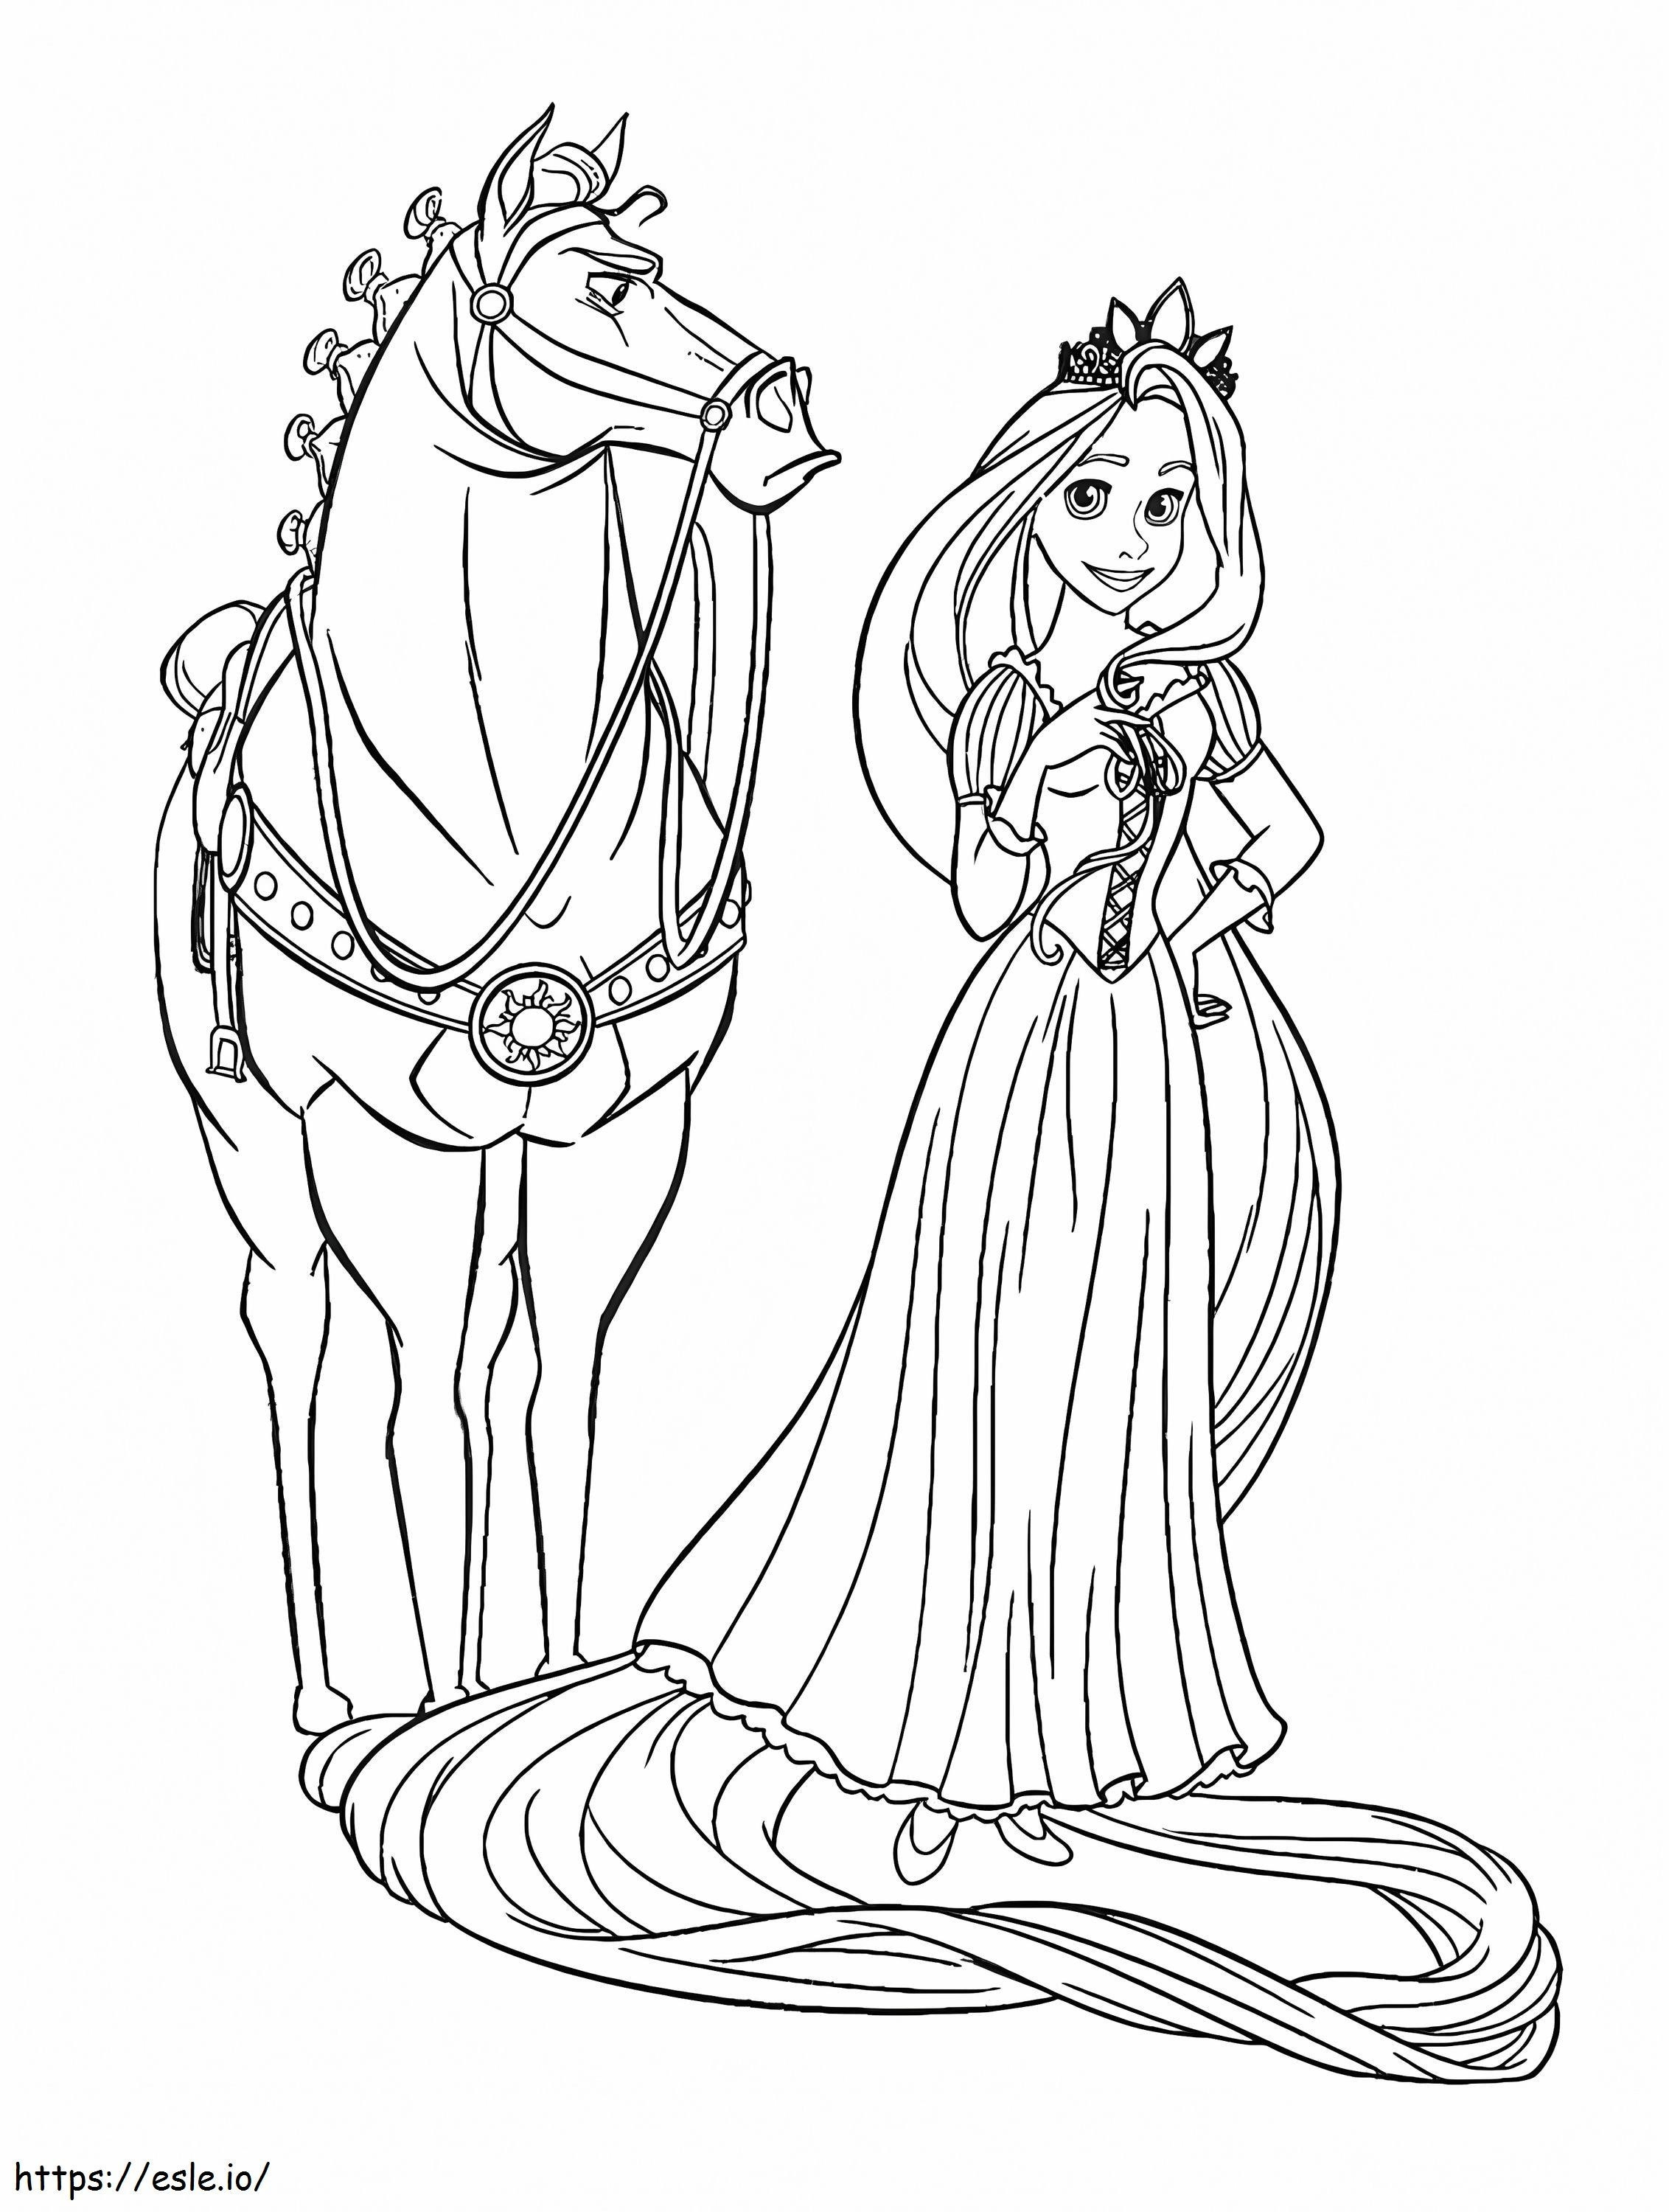 Princesa Rapunzel e Cavalo para colorir